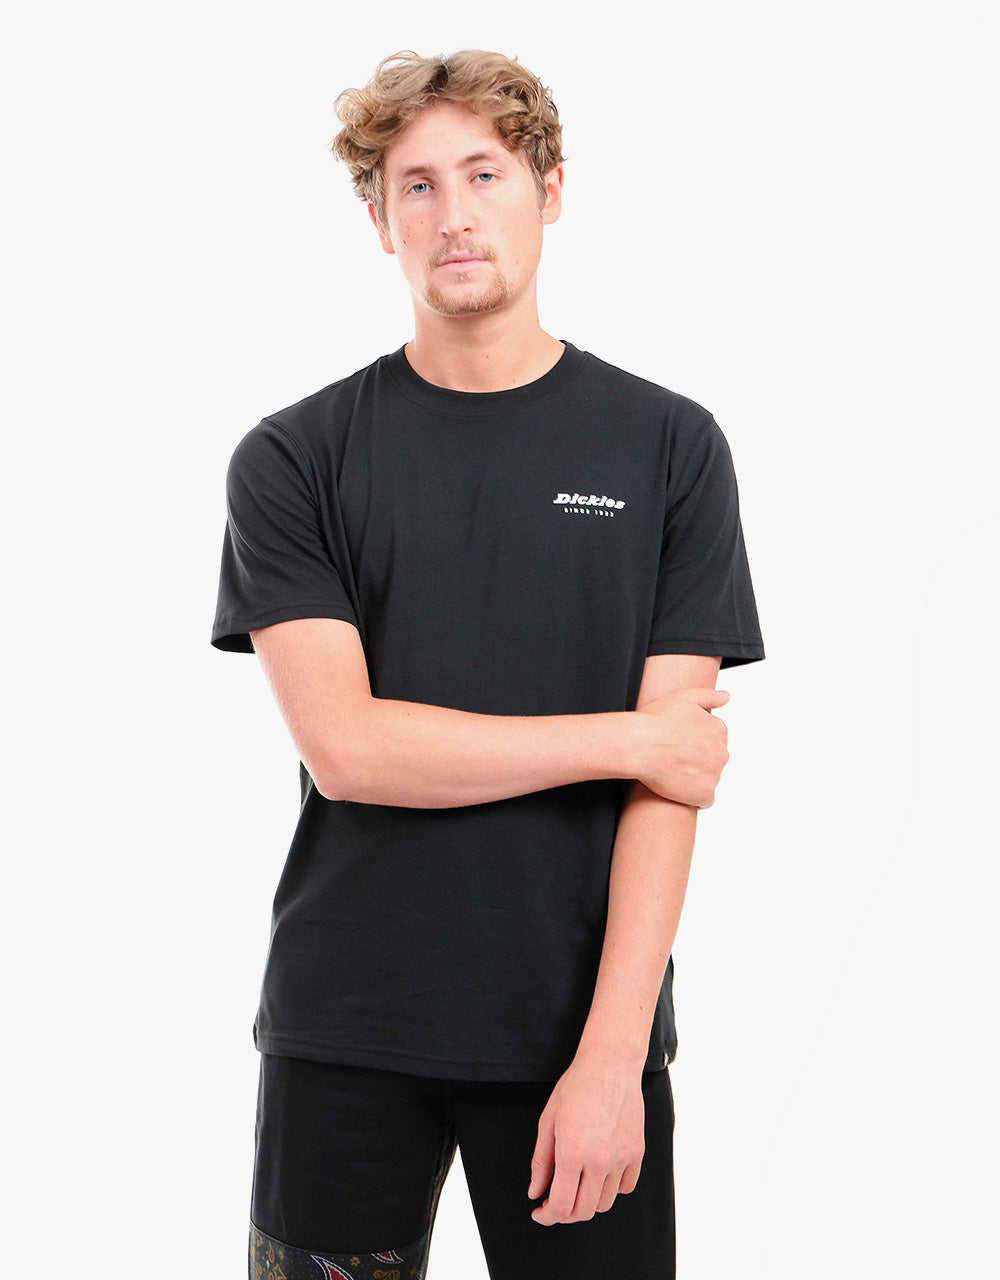 Dickies Reworked T-Shirt - Black